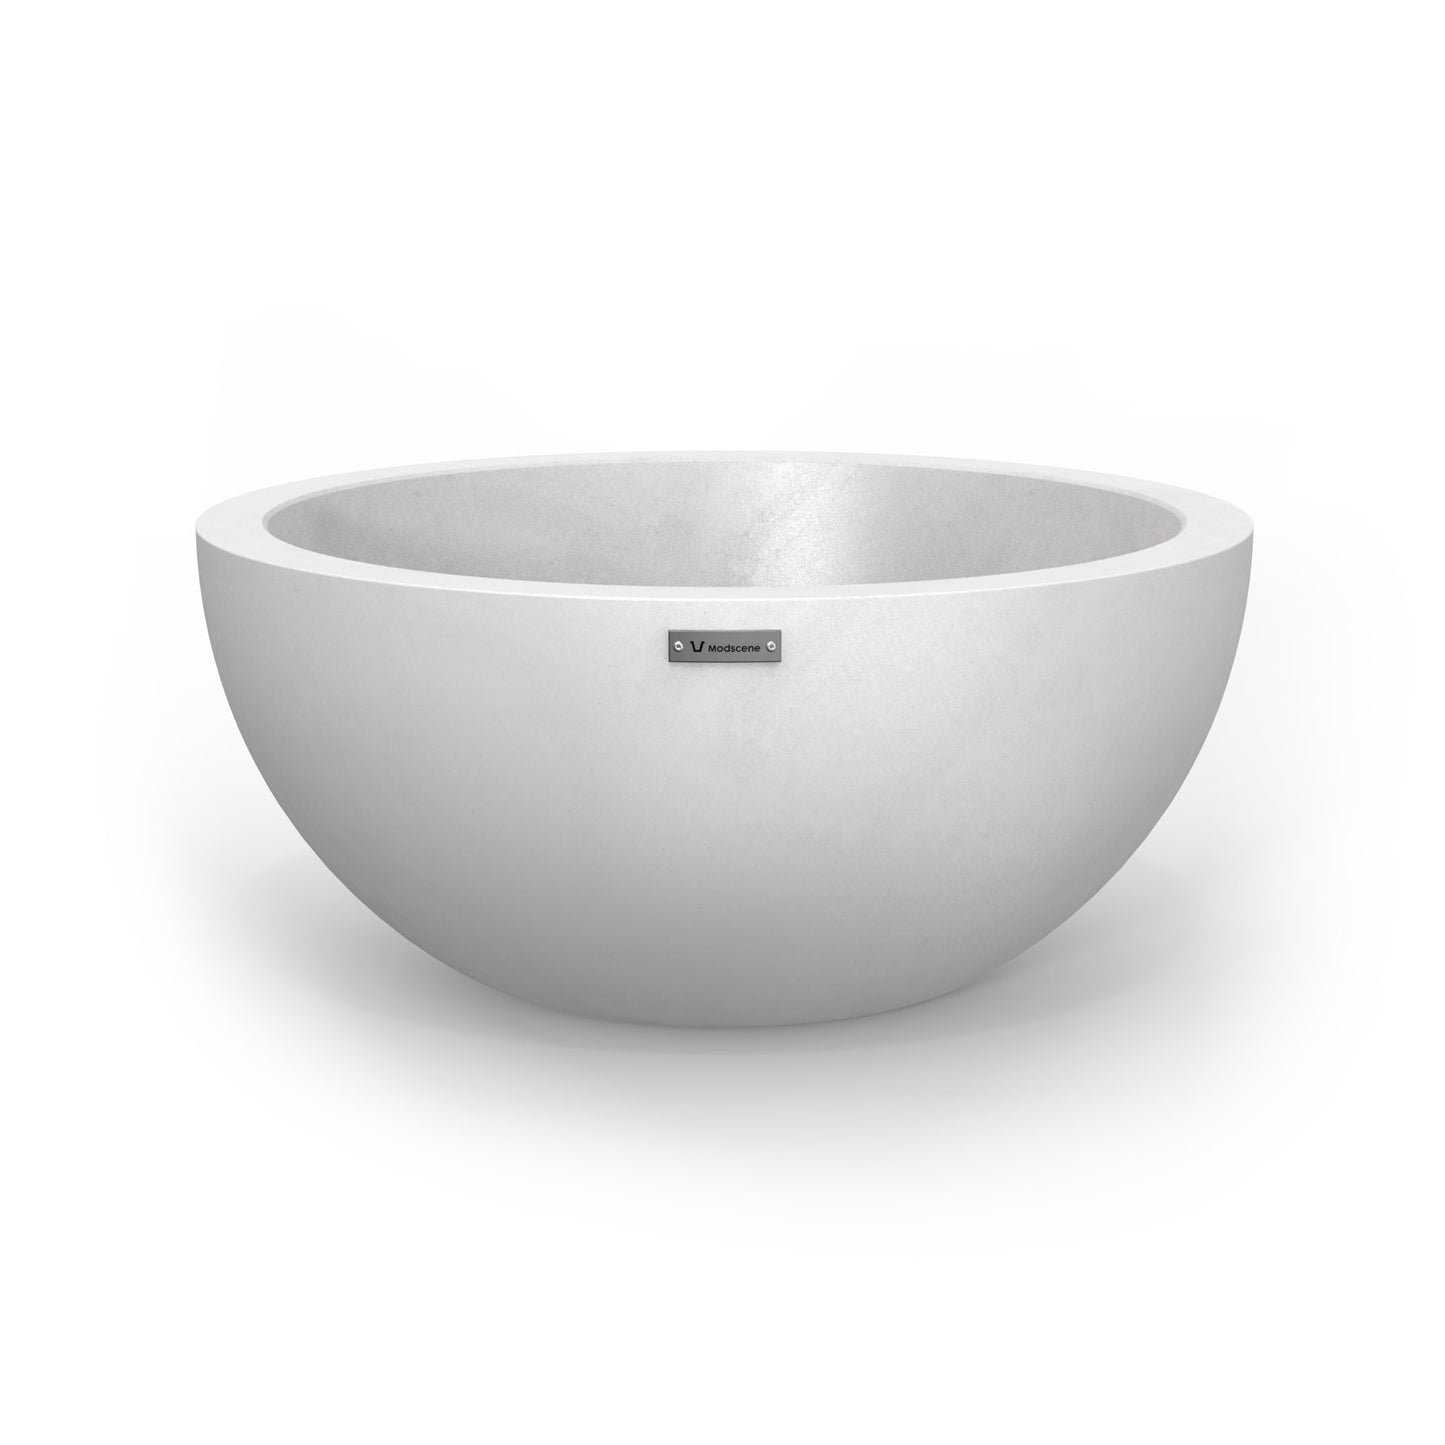 A medium Modscene planter bowl in white. NZ made.